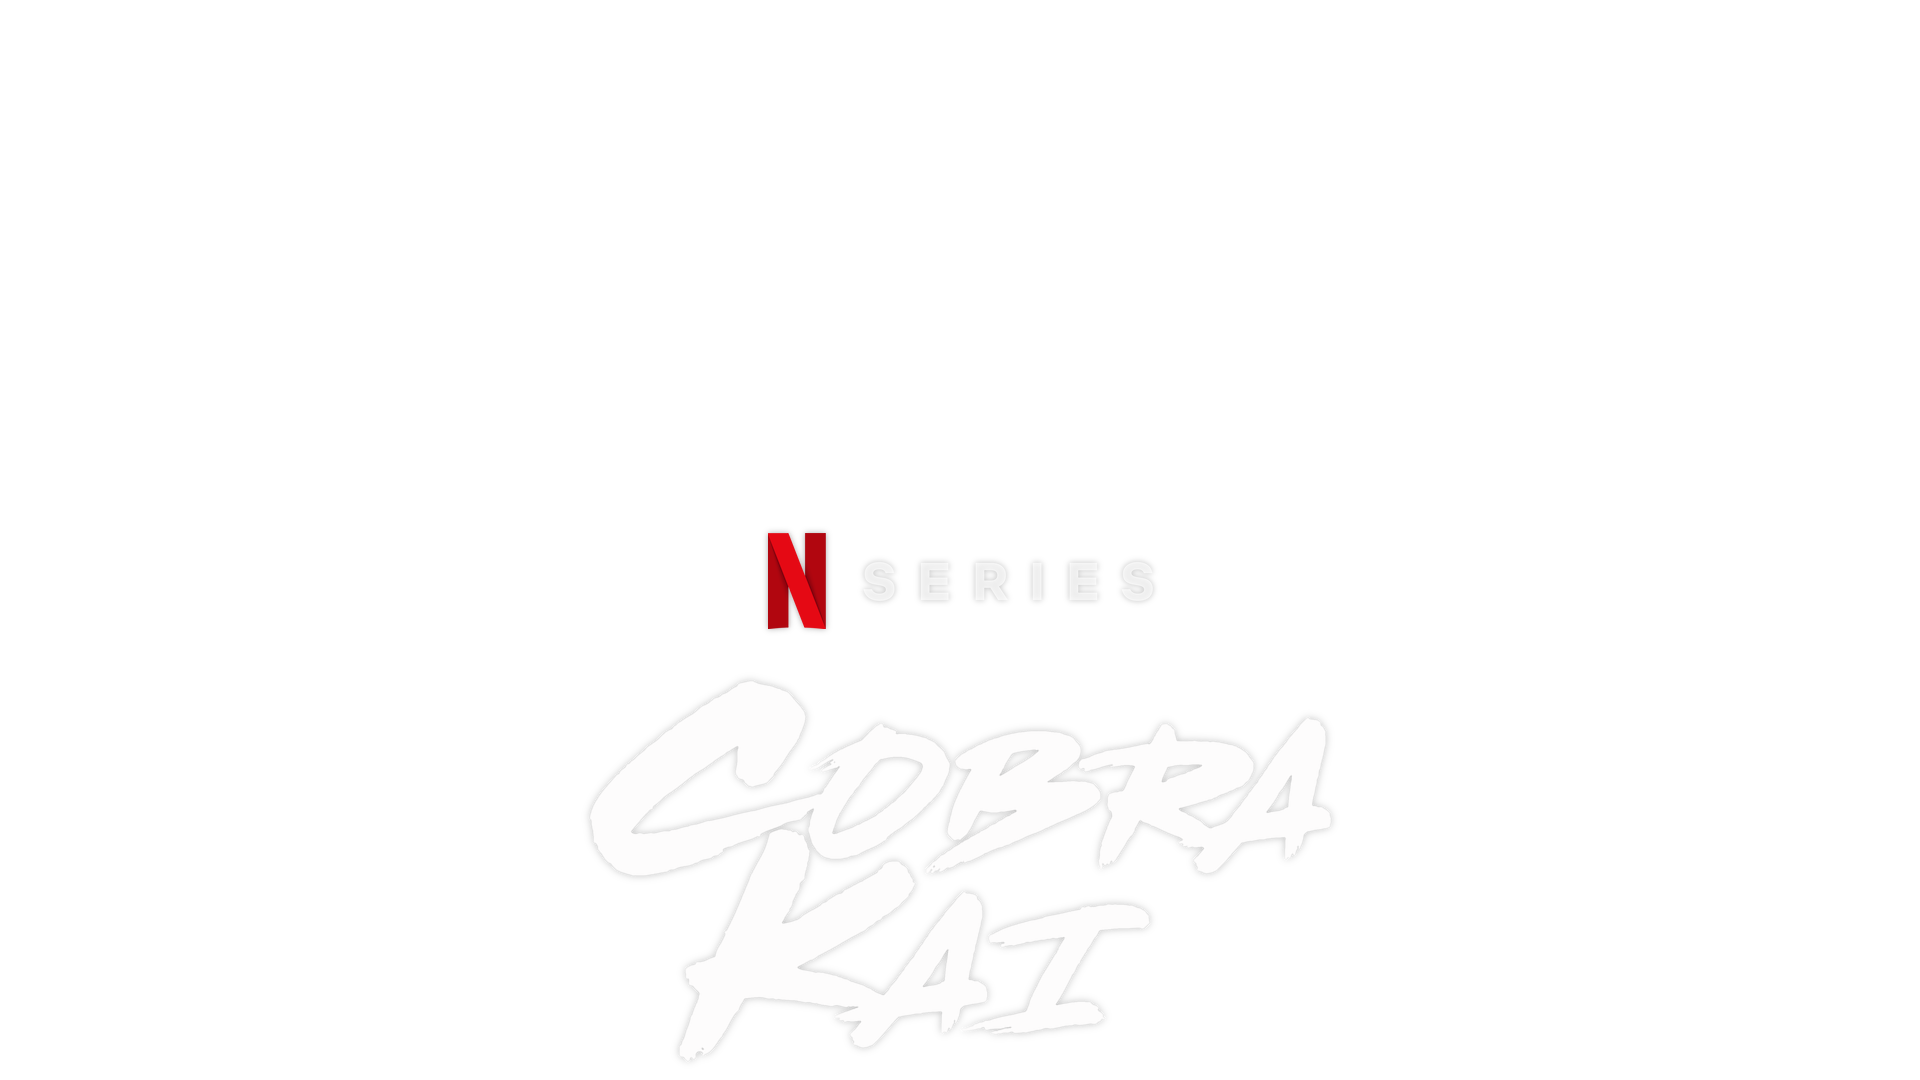 Cobra Kai cast  Meet the characters and actors in Netflix hit